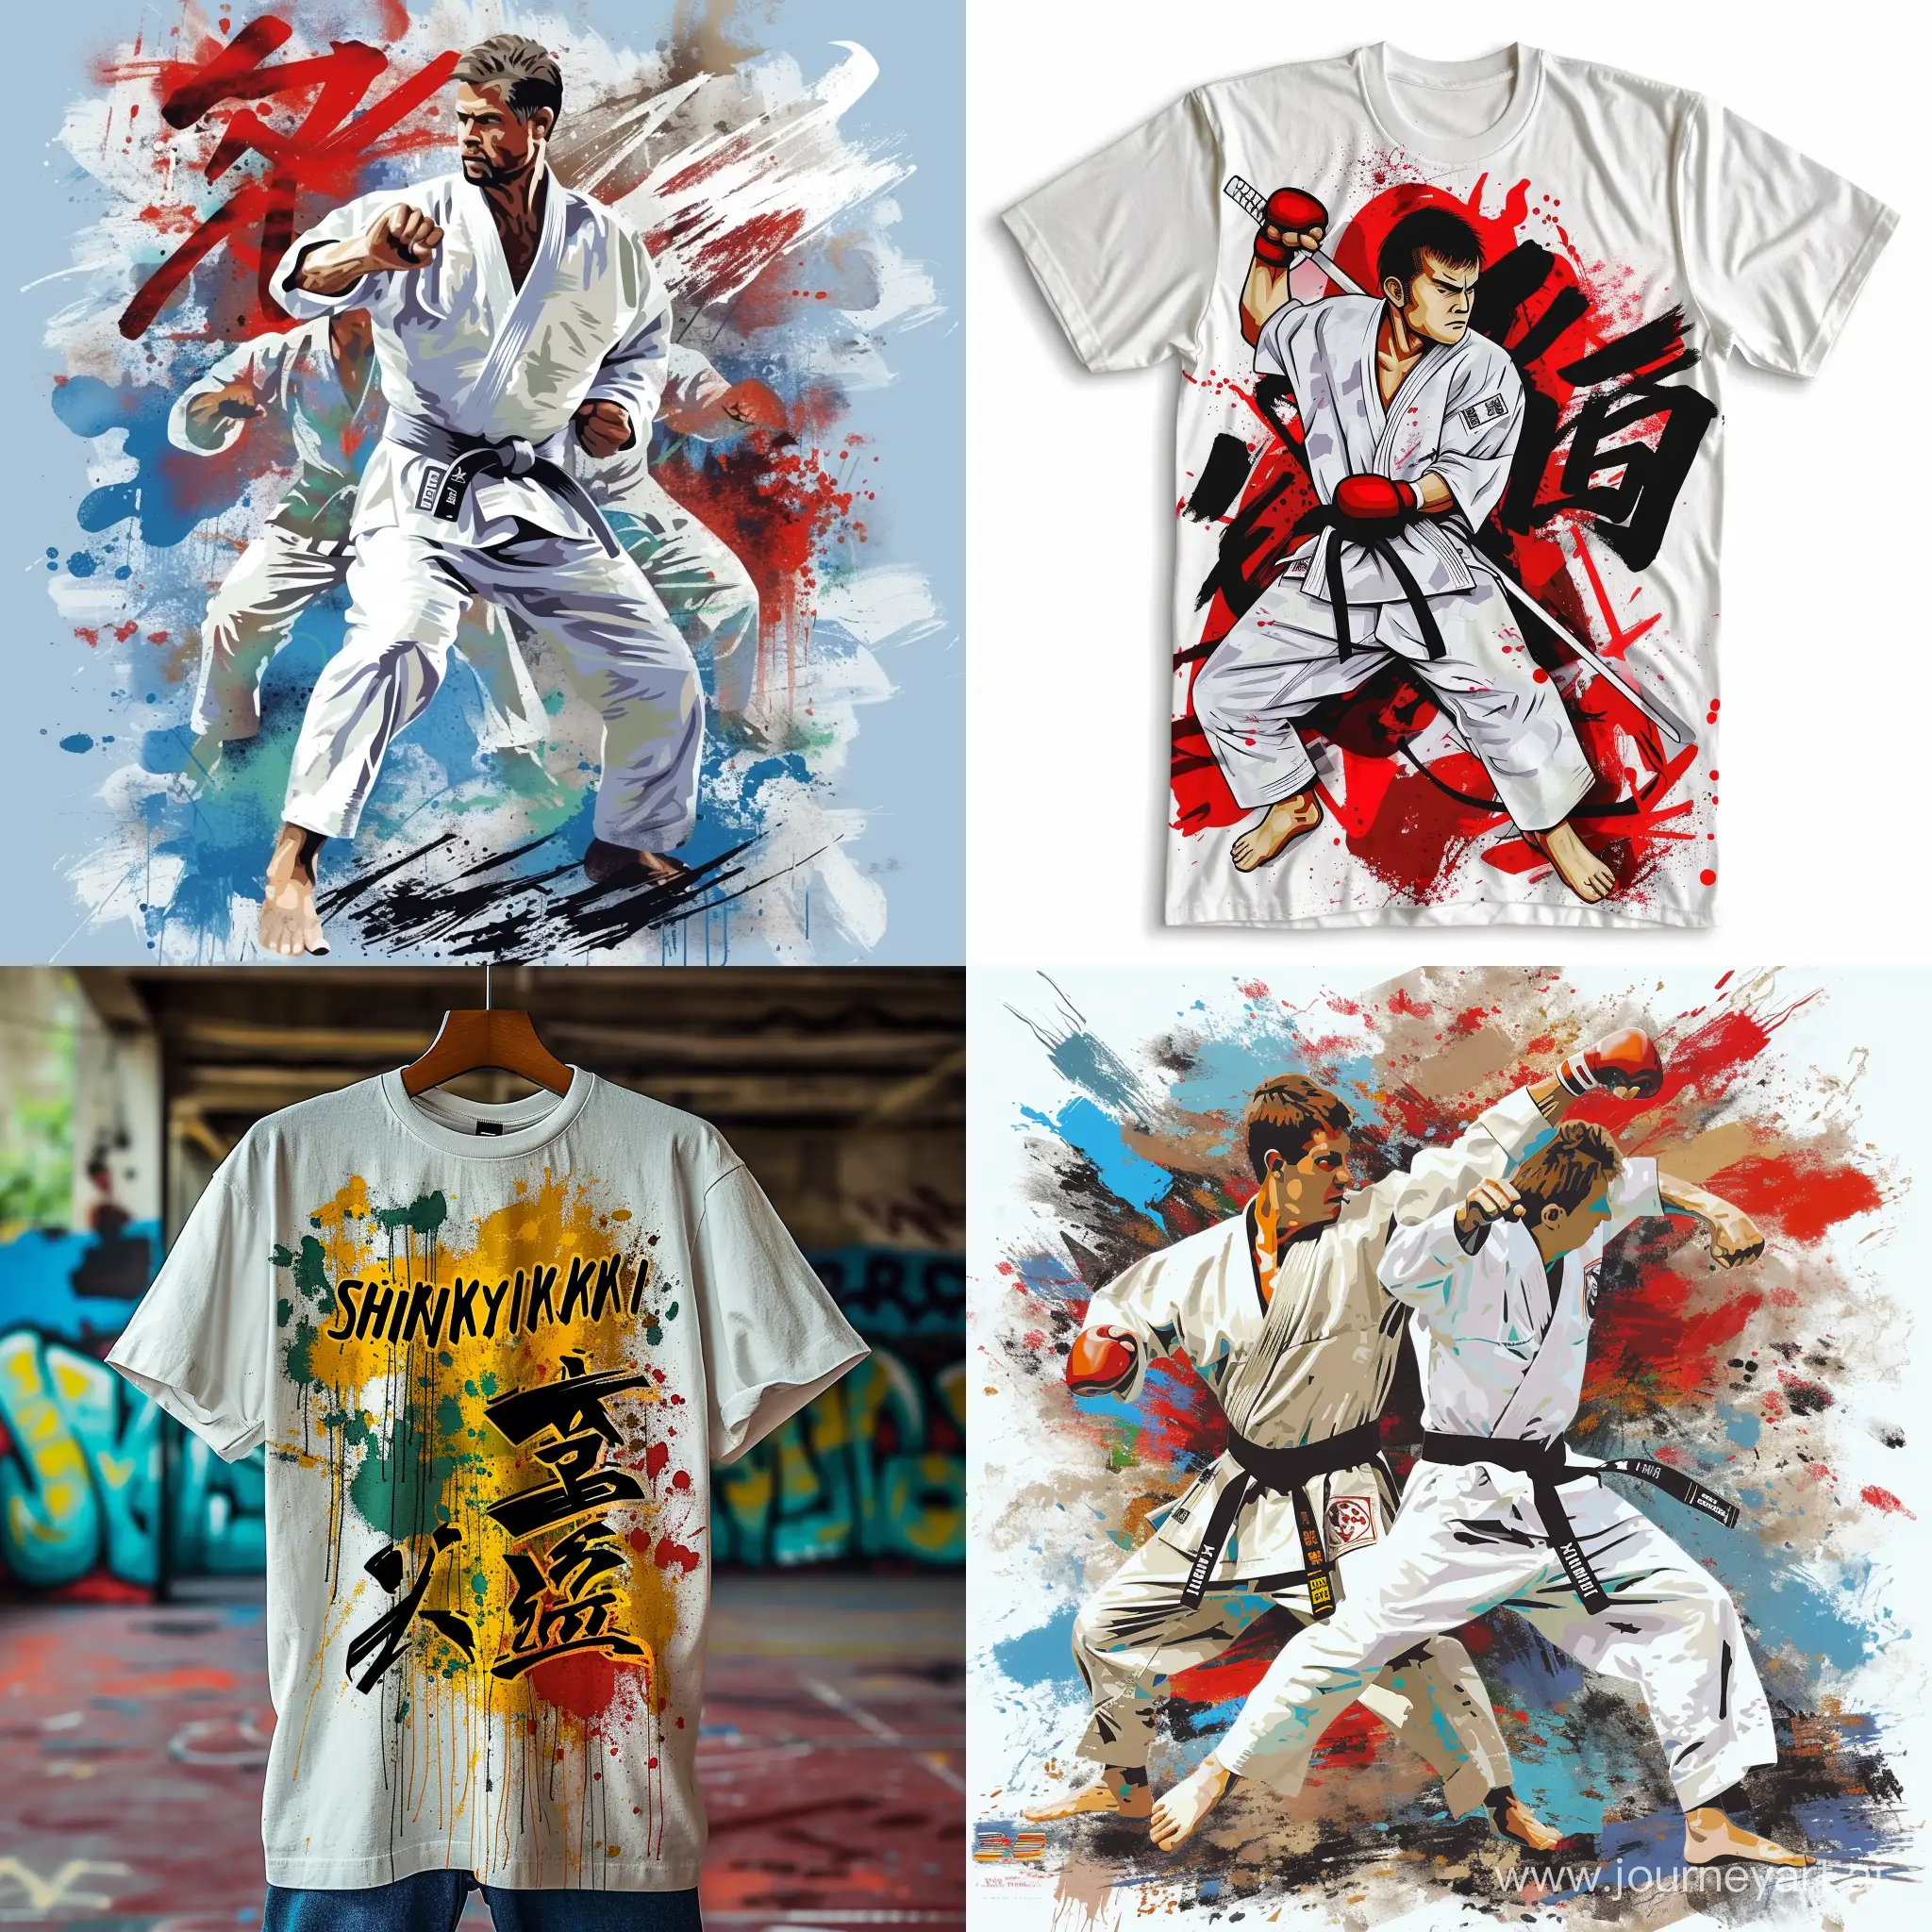 t-shirt design in graffiti style image of Shinkyokushinkai Karate